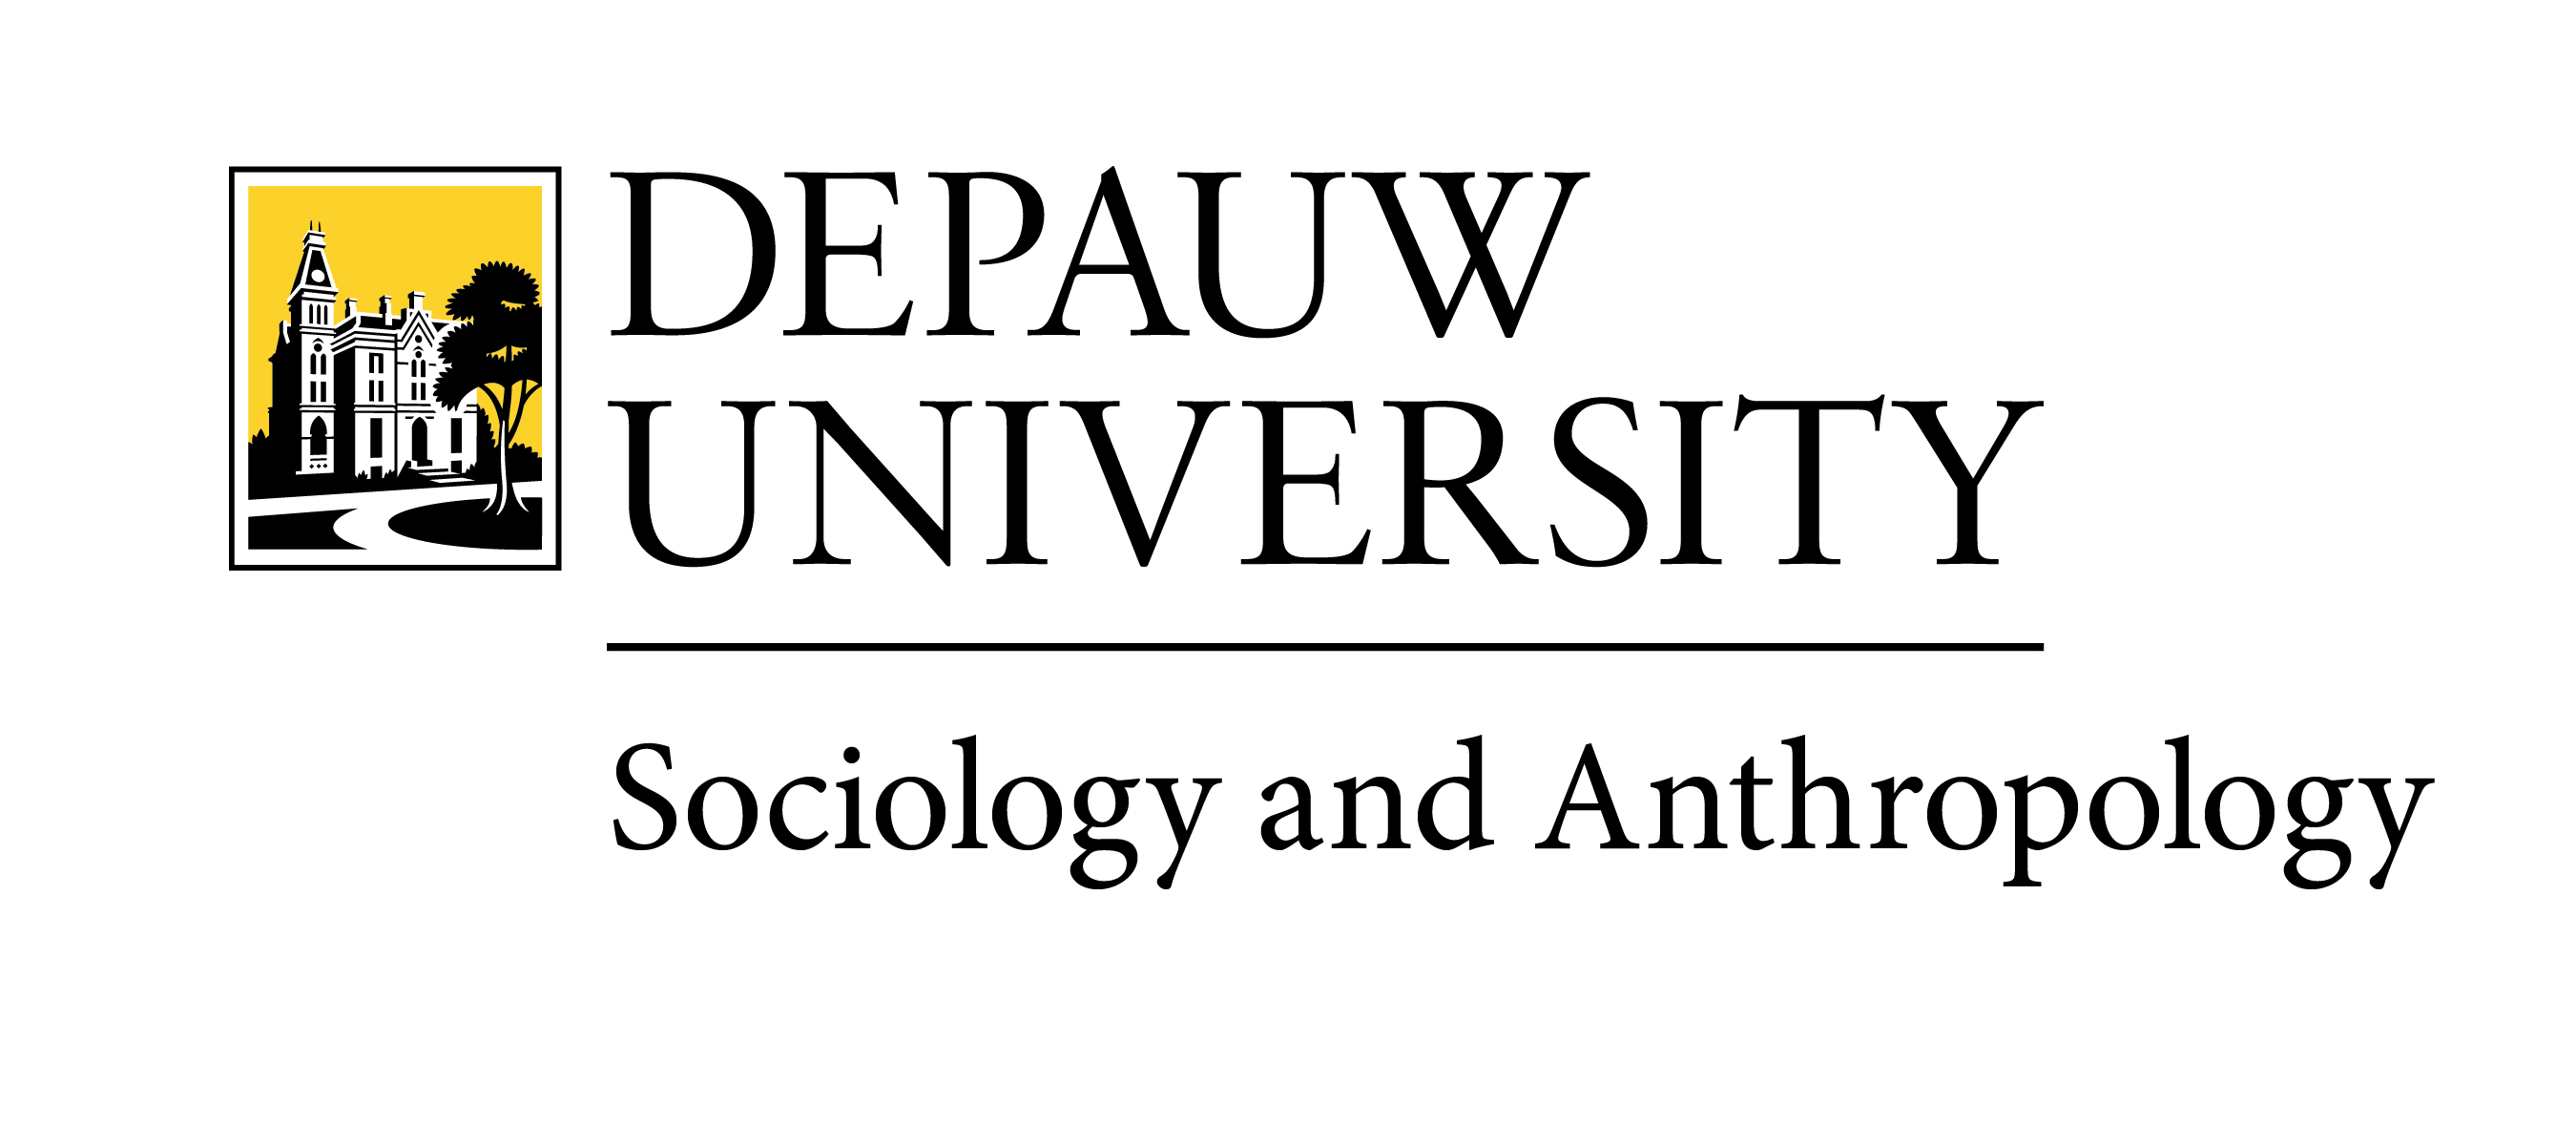 Sociology & Anthropology